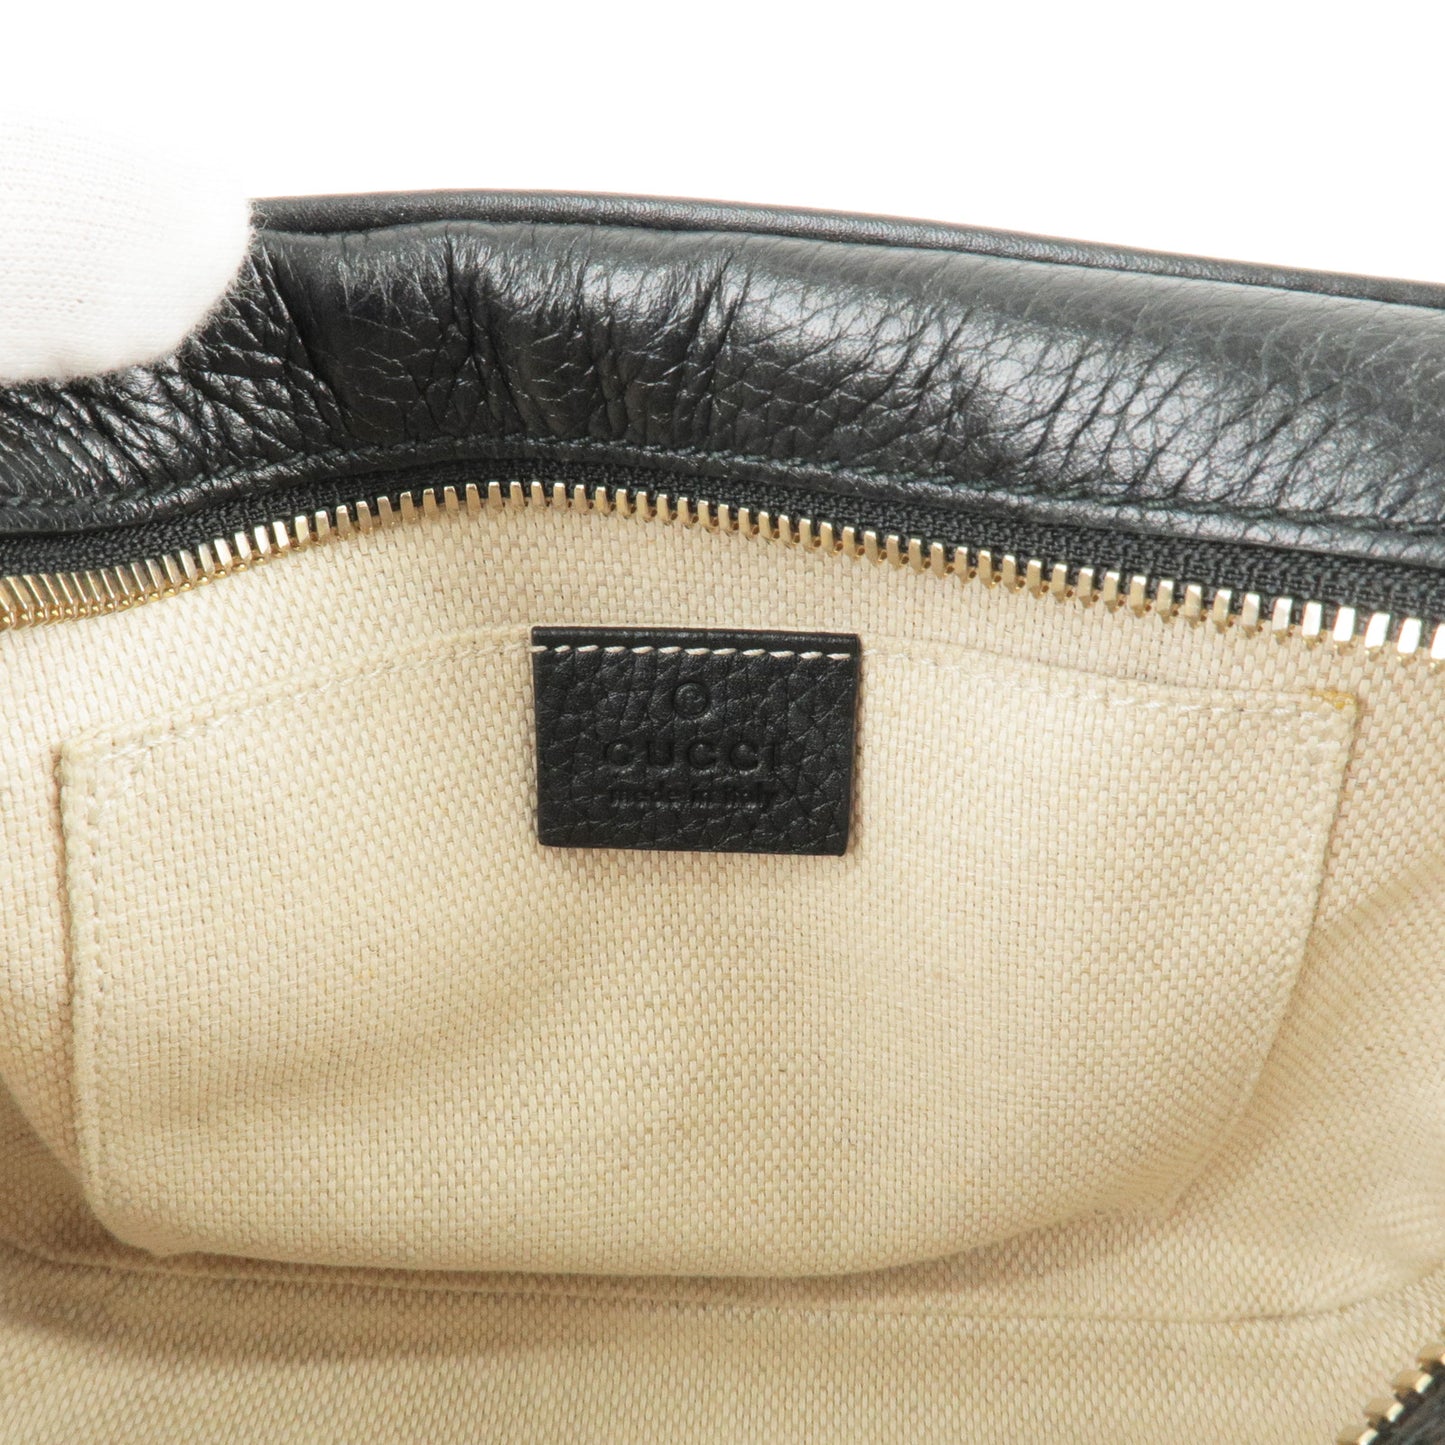 GUCCI SOHO Leather Small Disco Shoulder Bag Black 308364